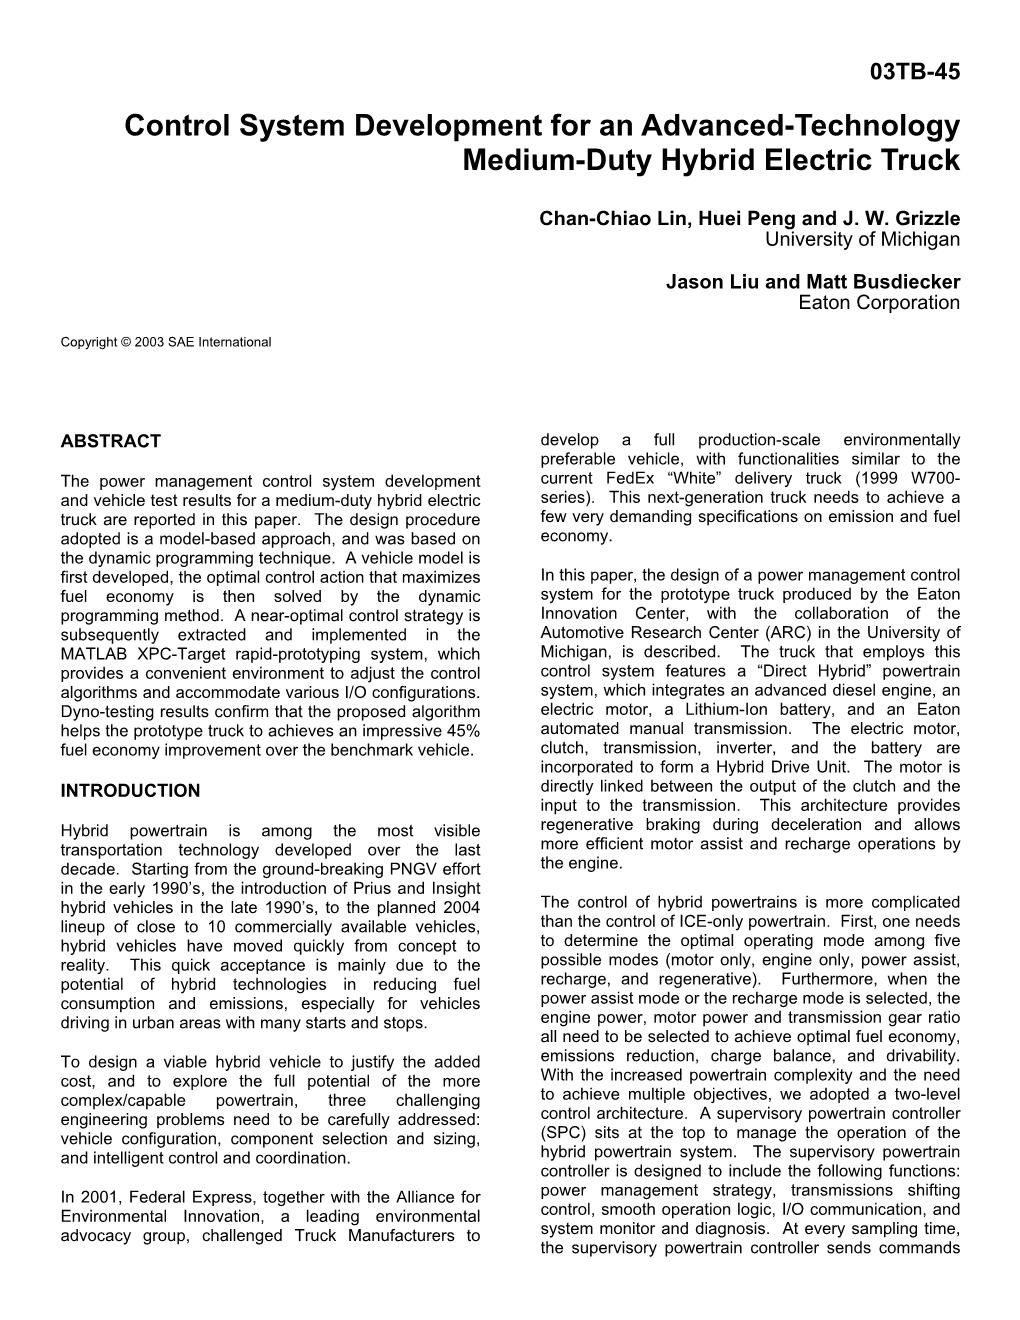 Control System Development for an Advanced-Technology Medium-Duty Hybrid Electric Truck